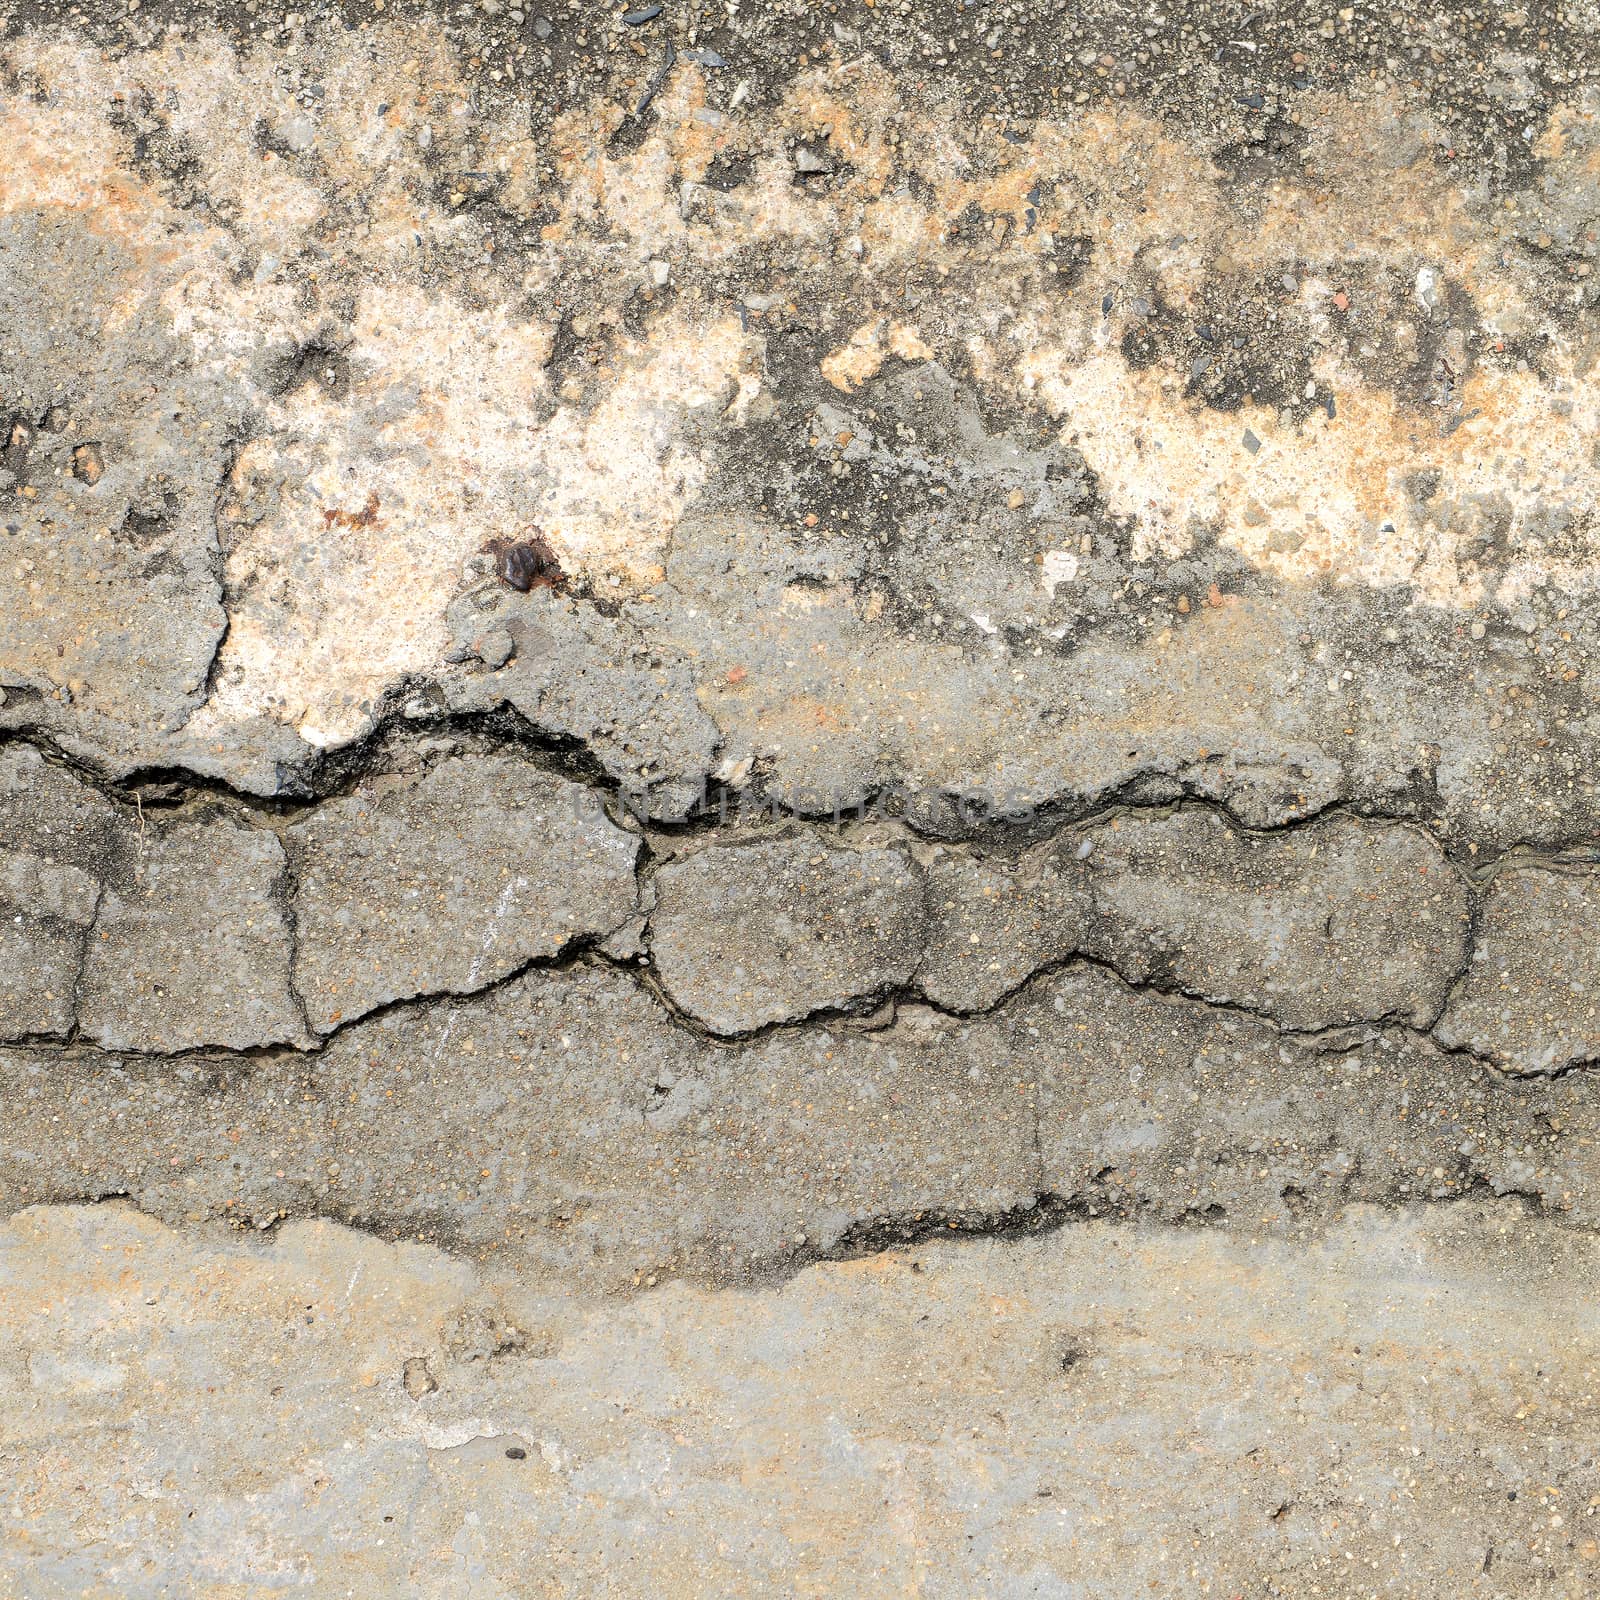 Composition of cracked concrete texture closeup background. 